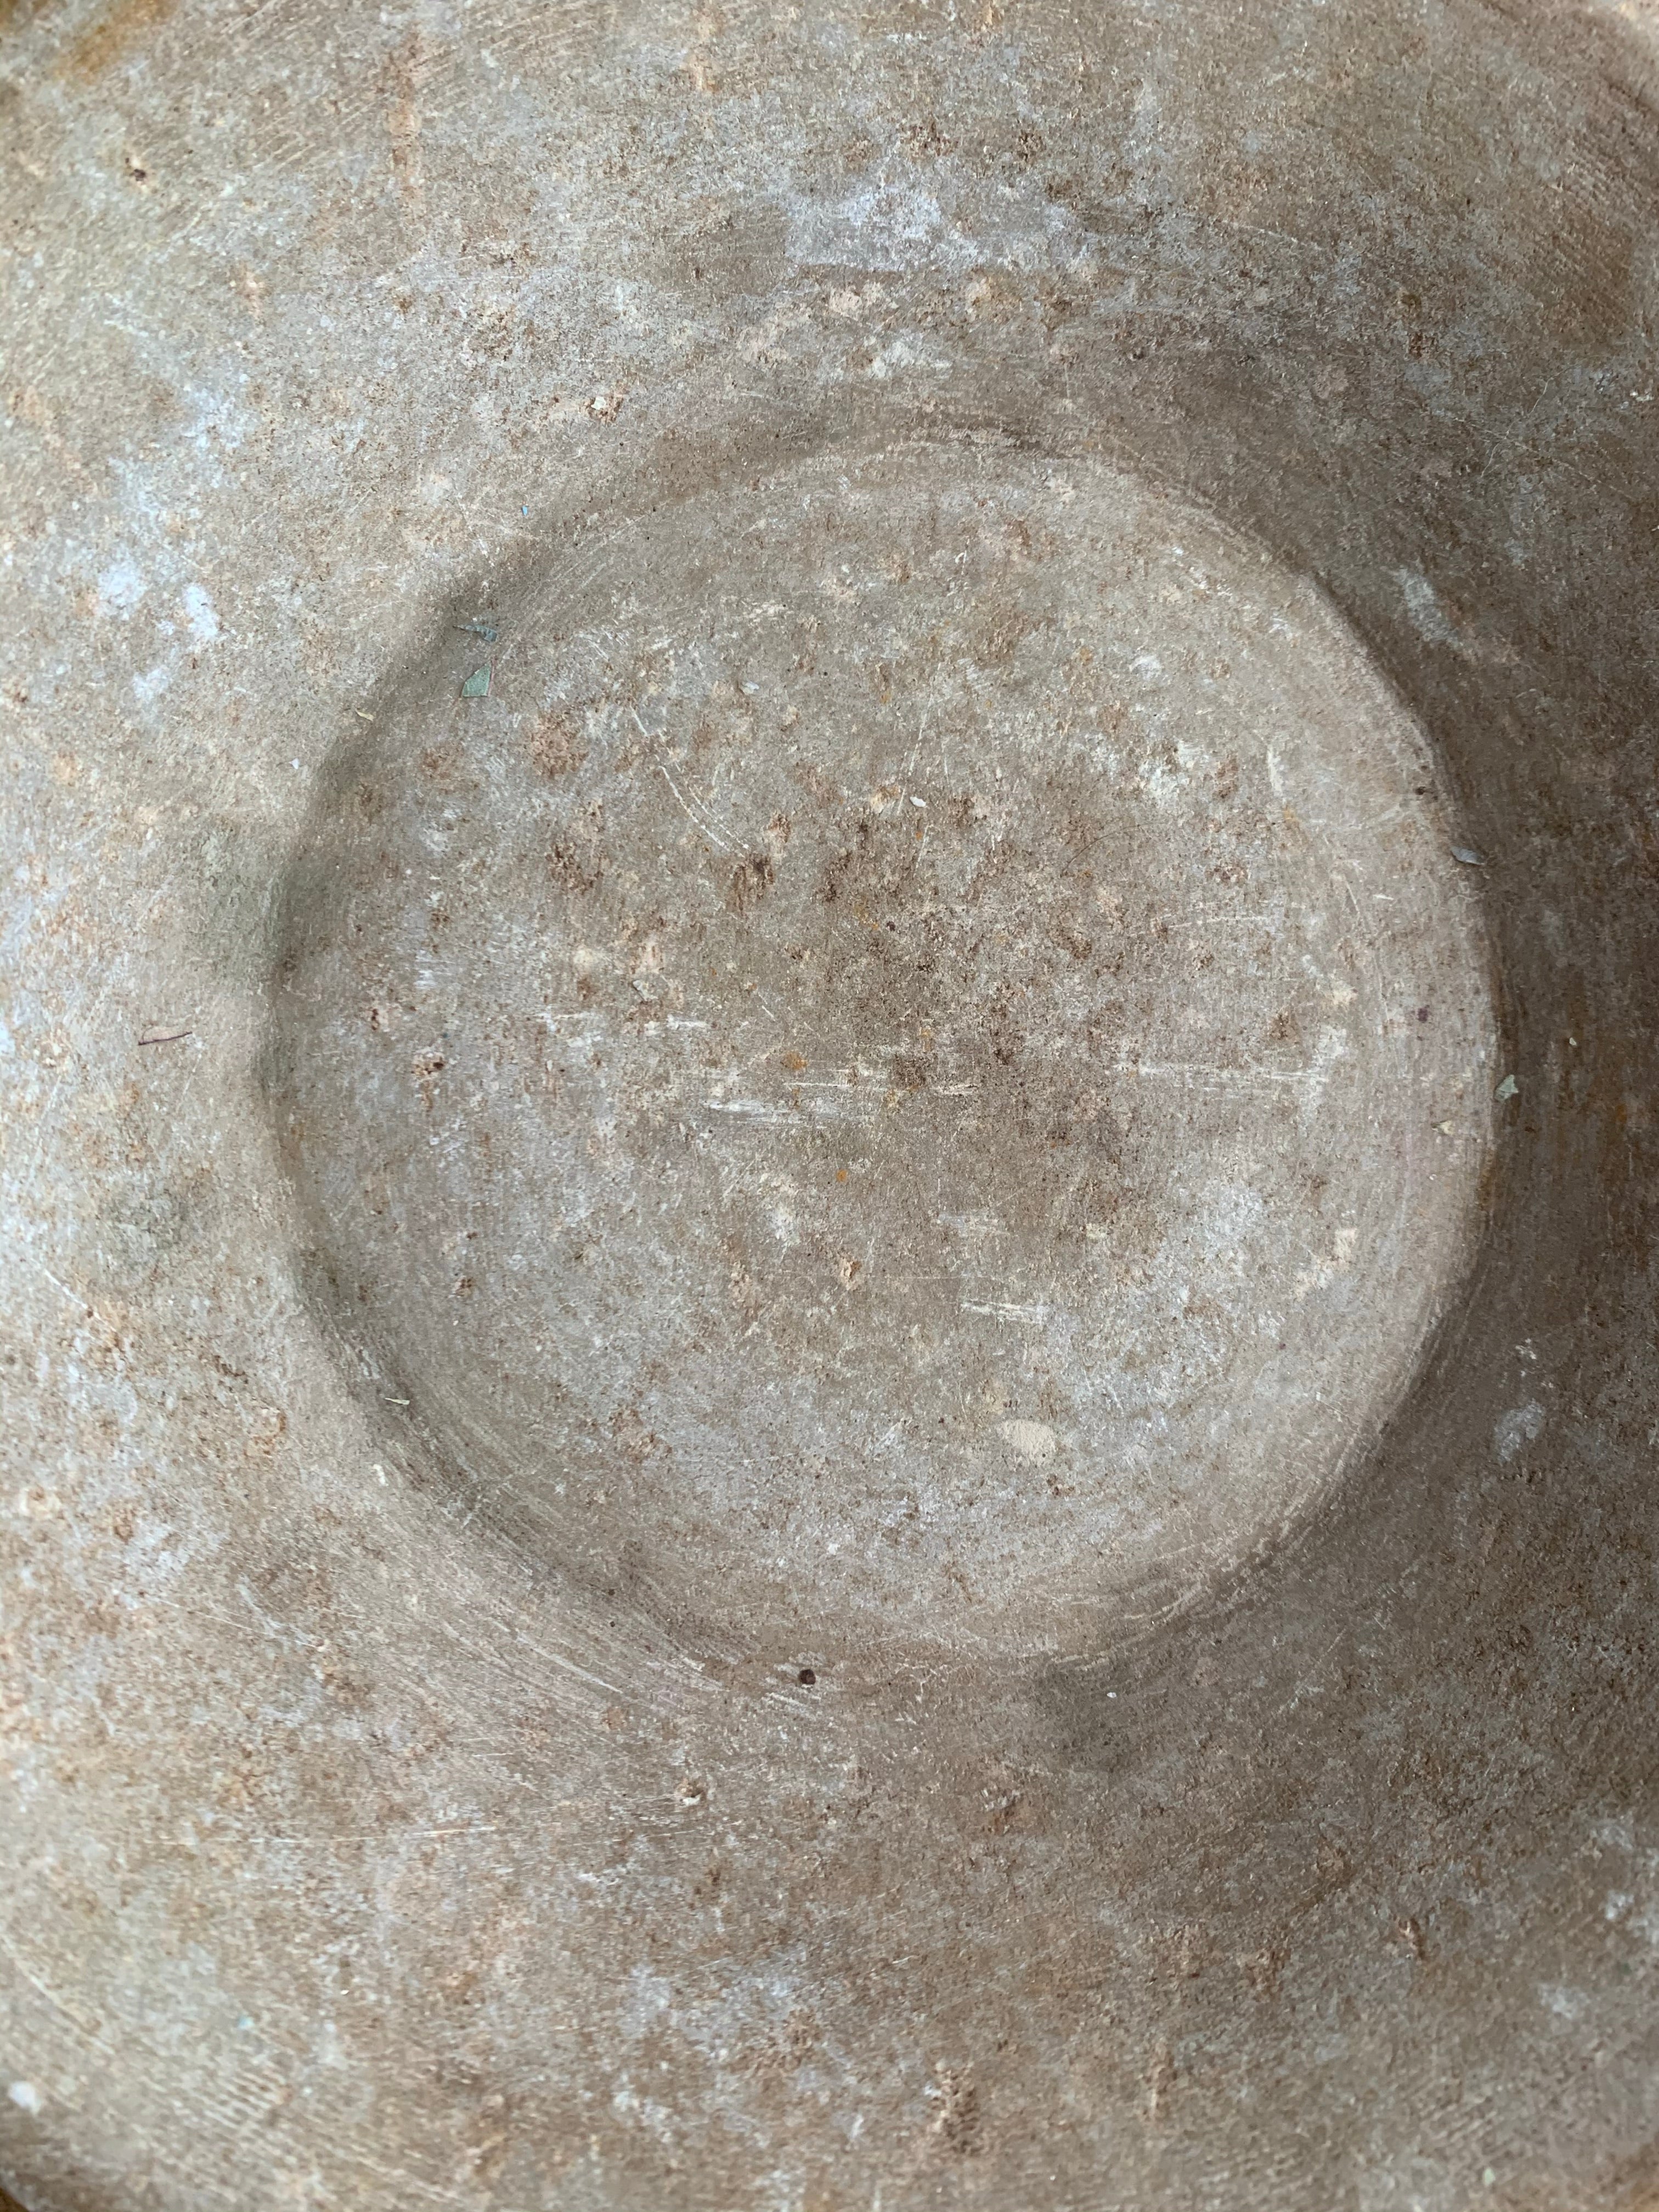 Antique Marble Stone  Bowl